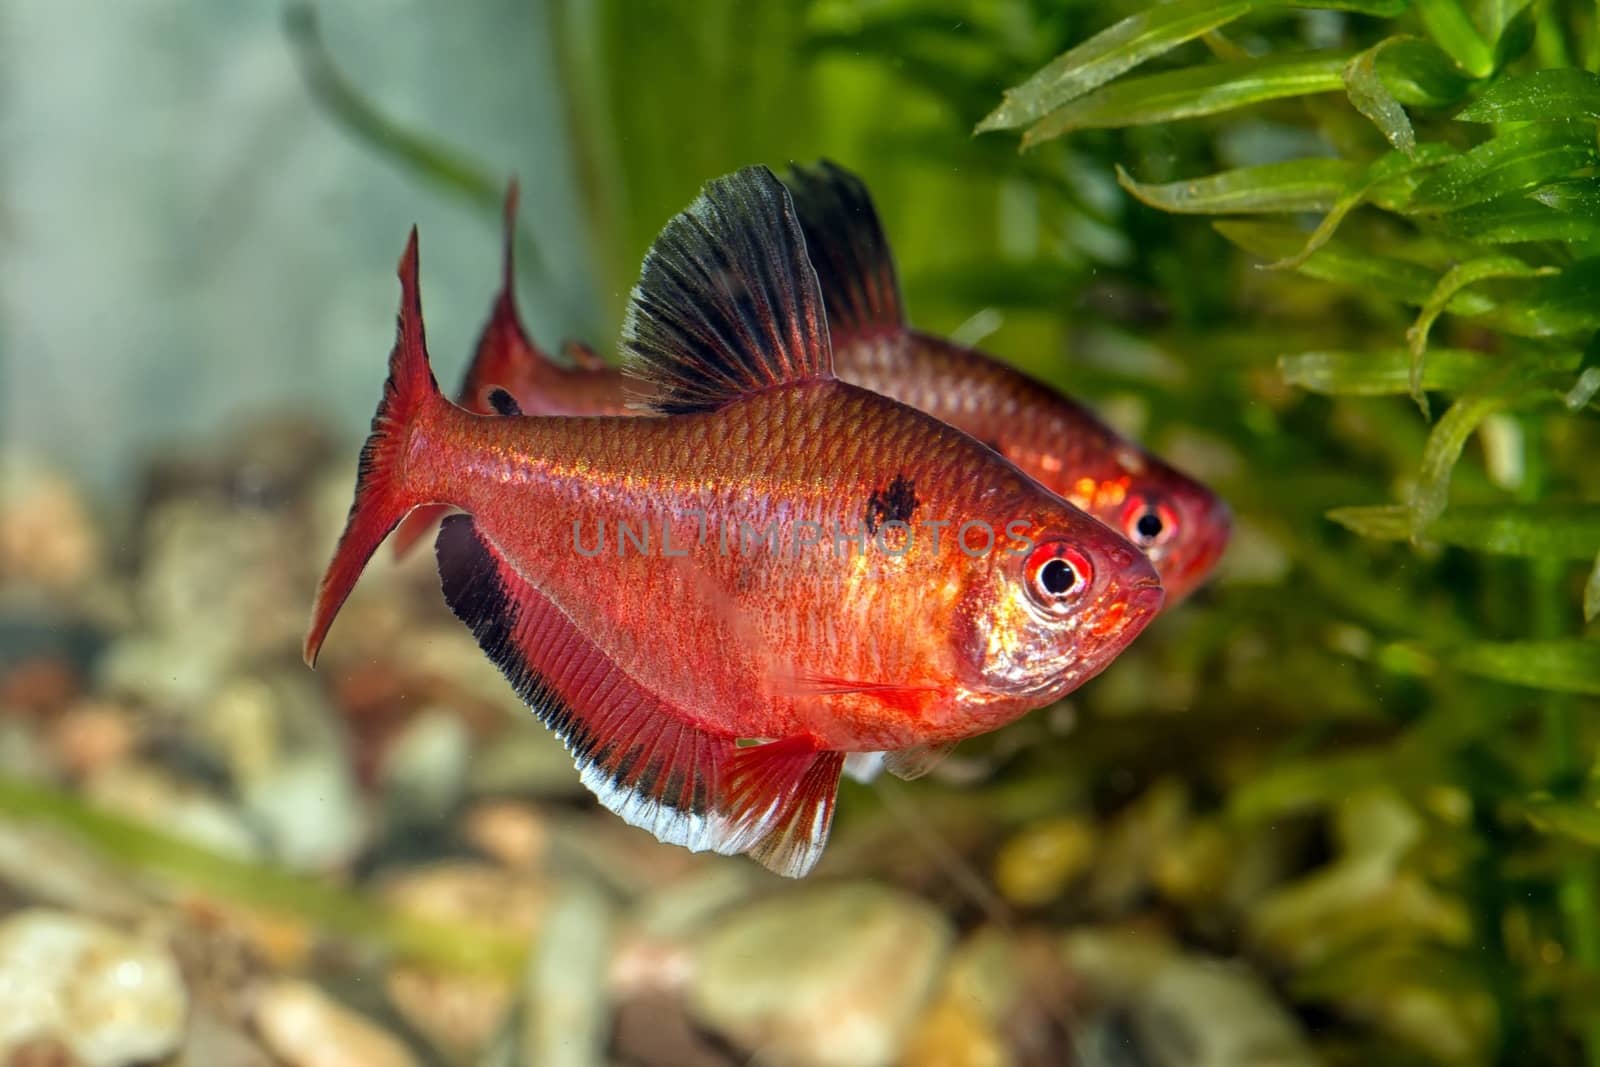 Tropical freshwater aquarium fish from genus Hyphessobrycon.